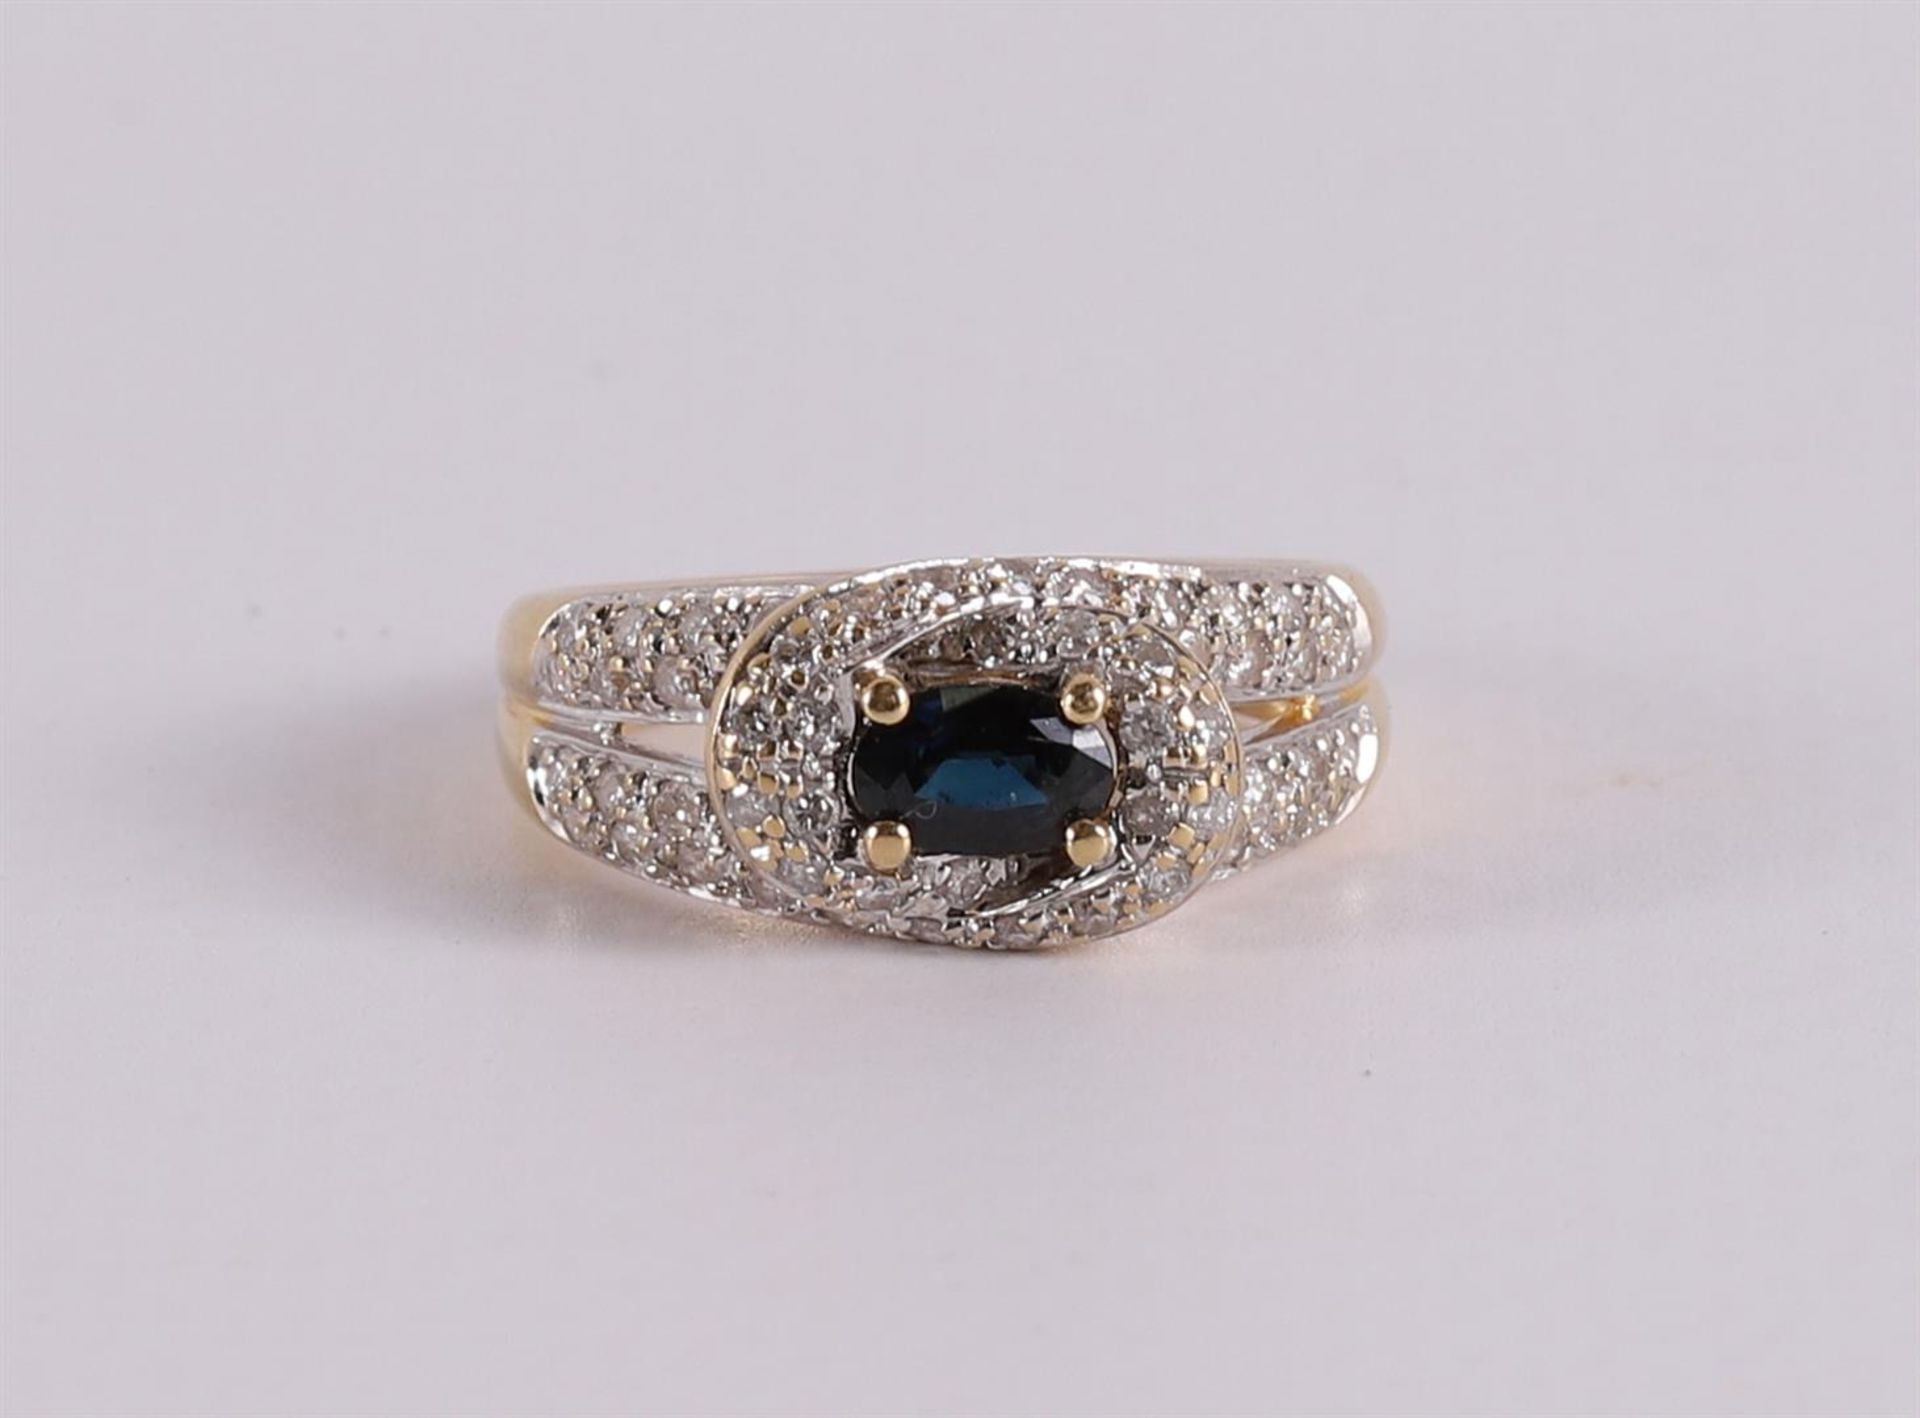 An 18 kt gold ring with an oval facet cut blue sapphire.